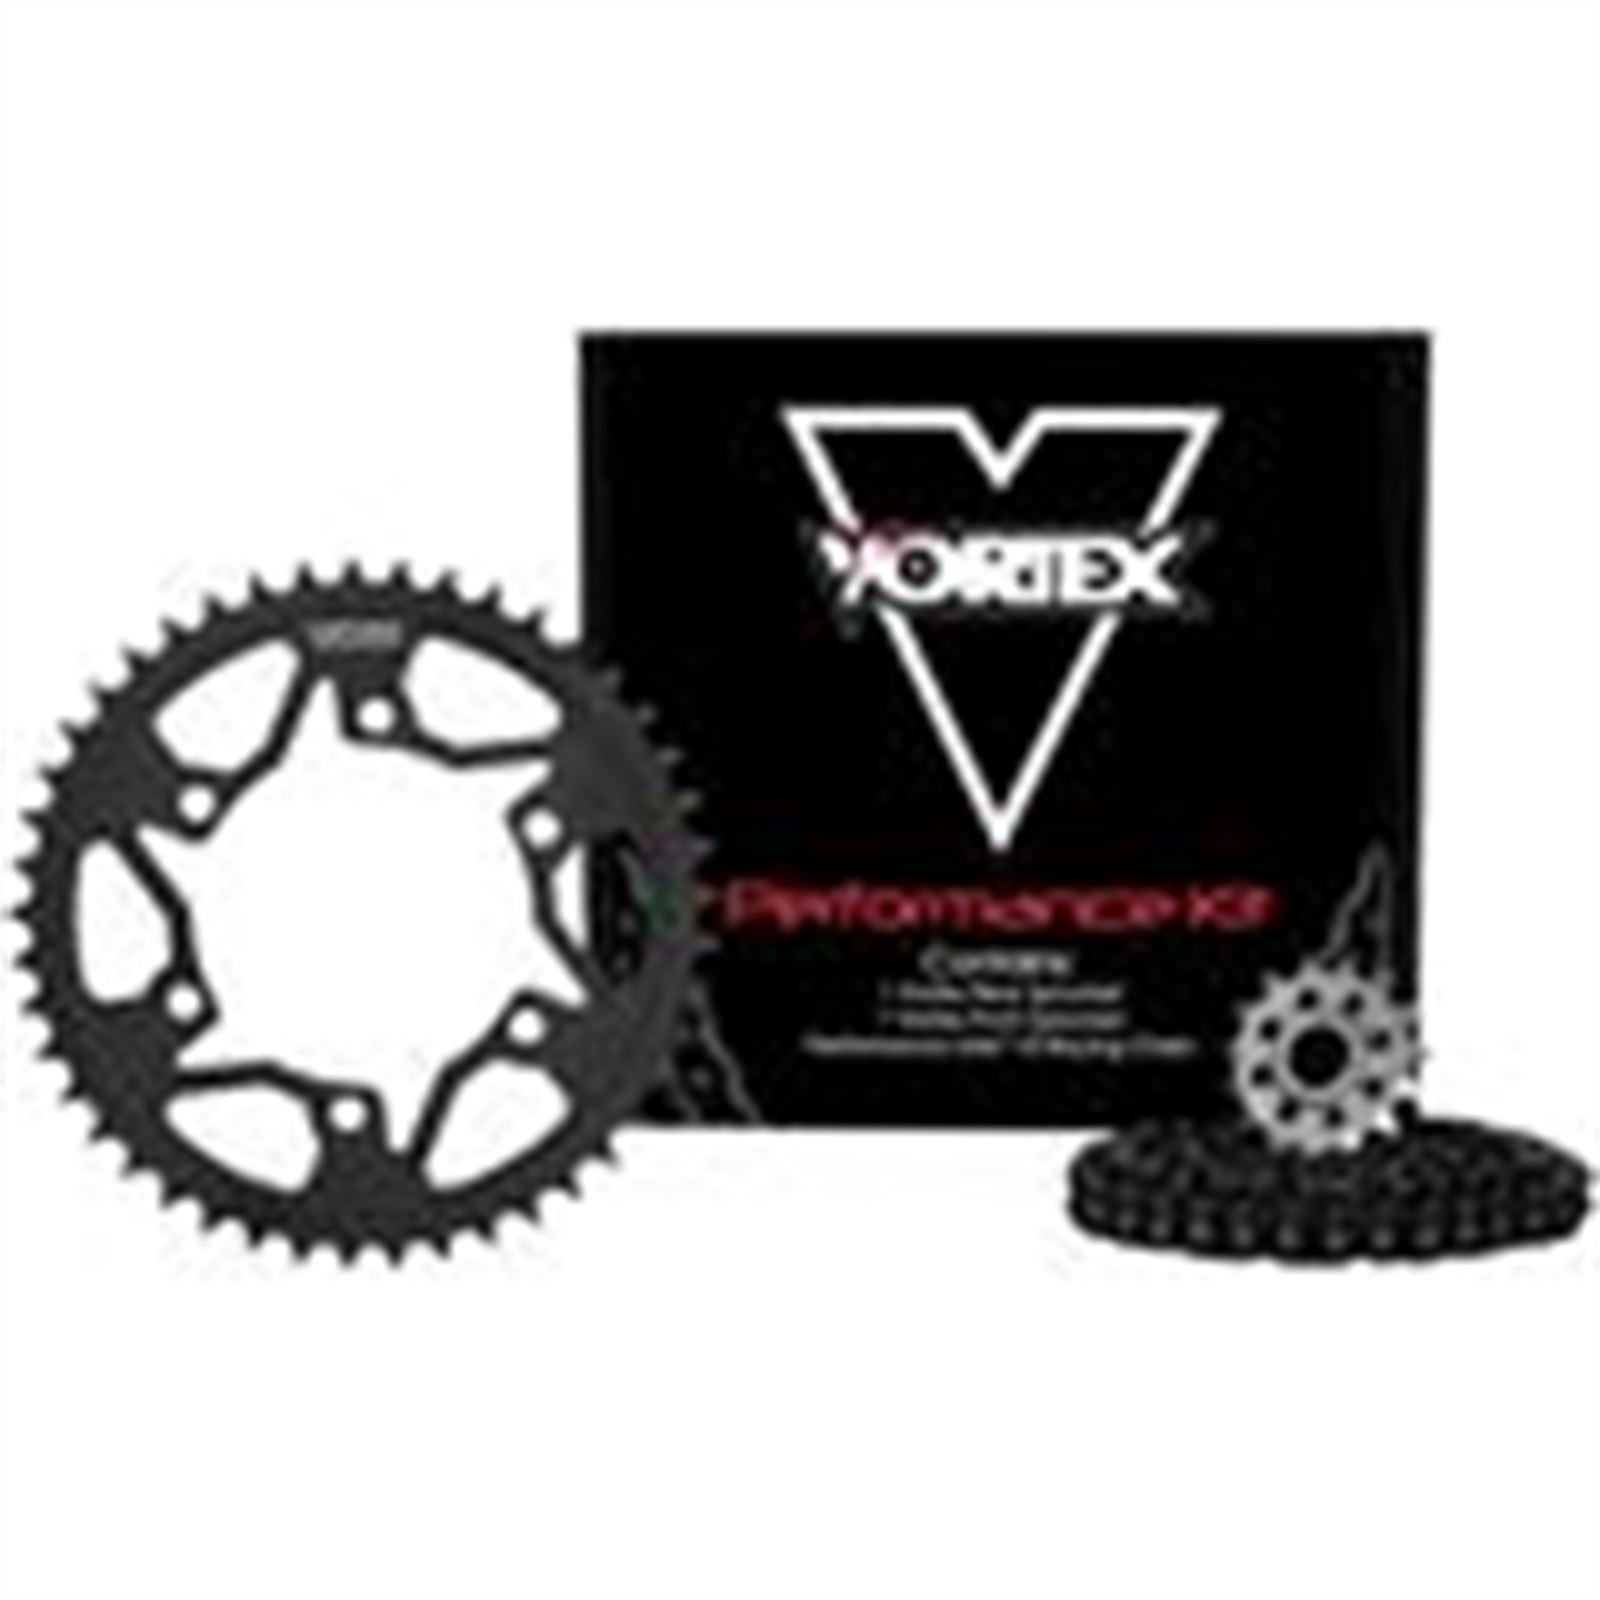 Vortex Sprocket/Chain Kit Black with Steel Rear Sprocket is at